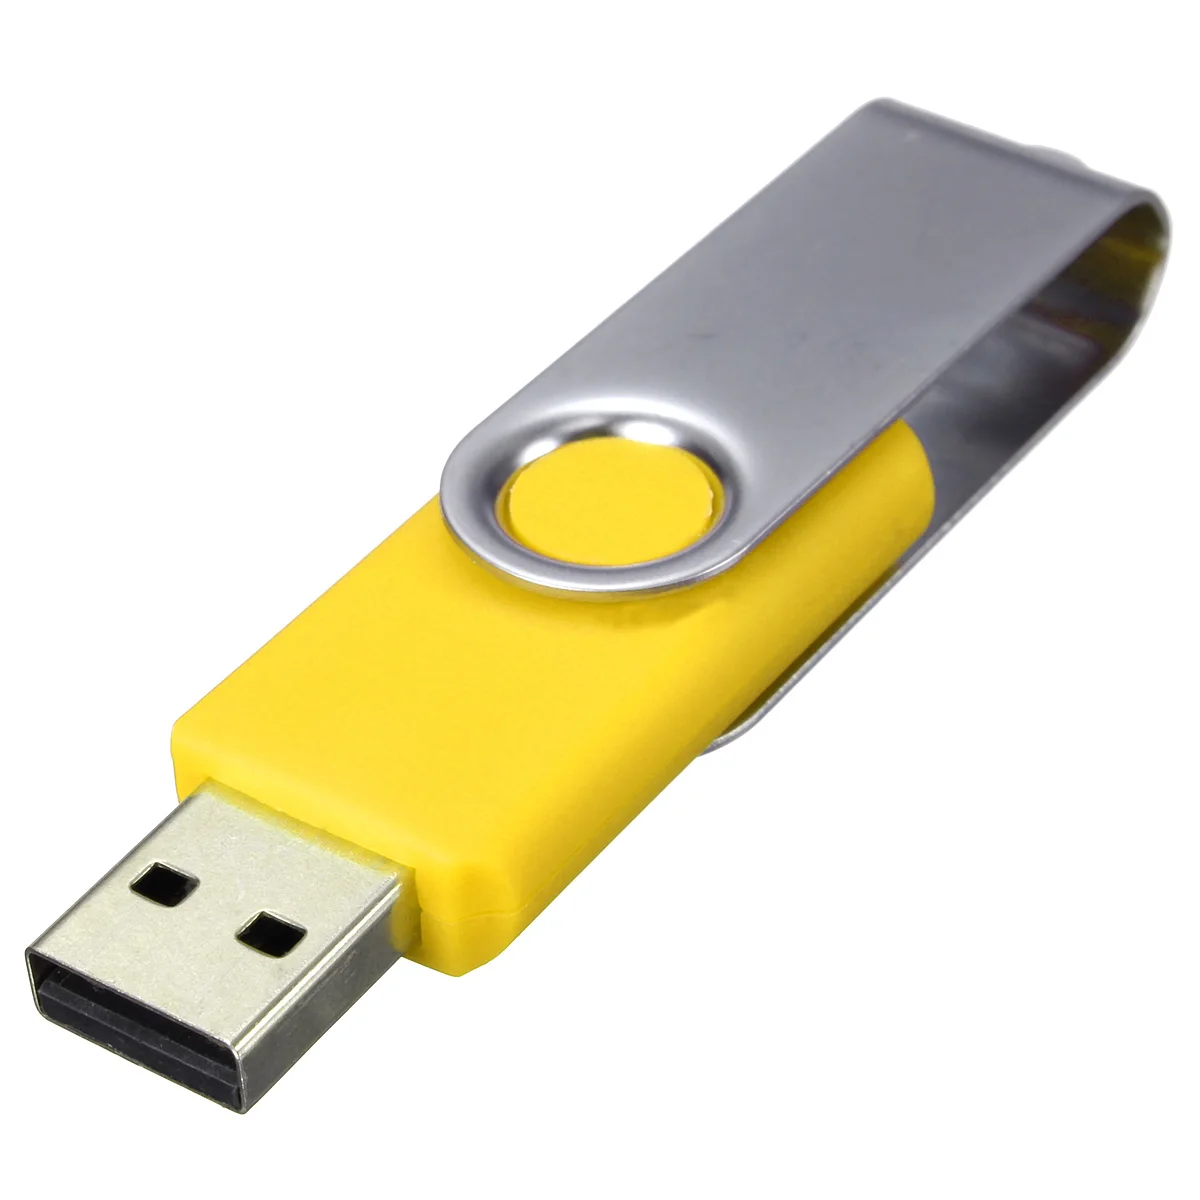 Цветной смартфон флеш-диск Usb 2,0 2 ГБ флеш-накопитель Флешка внешний накопитель Micro Usb флэш-накопитель - Цвет: Yellow